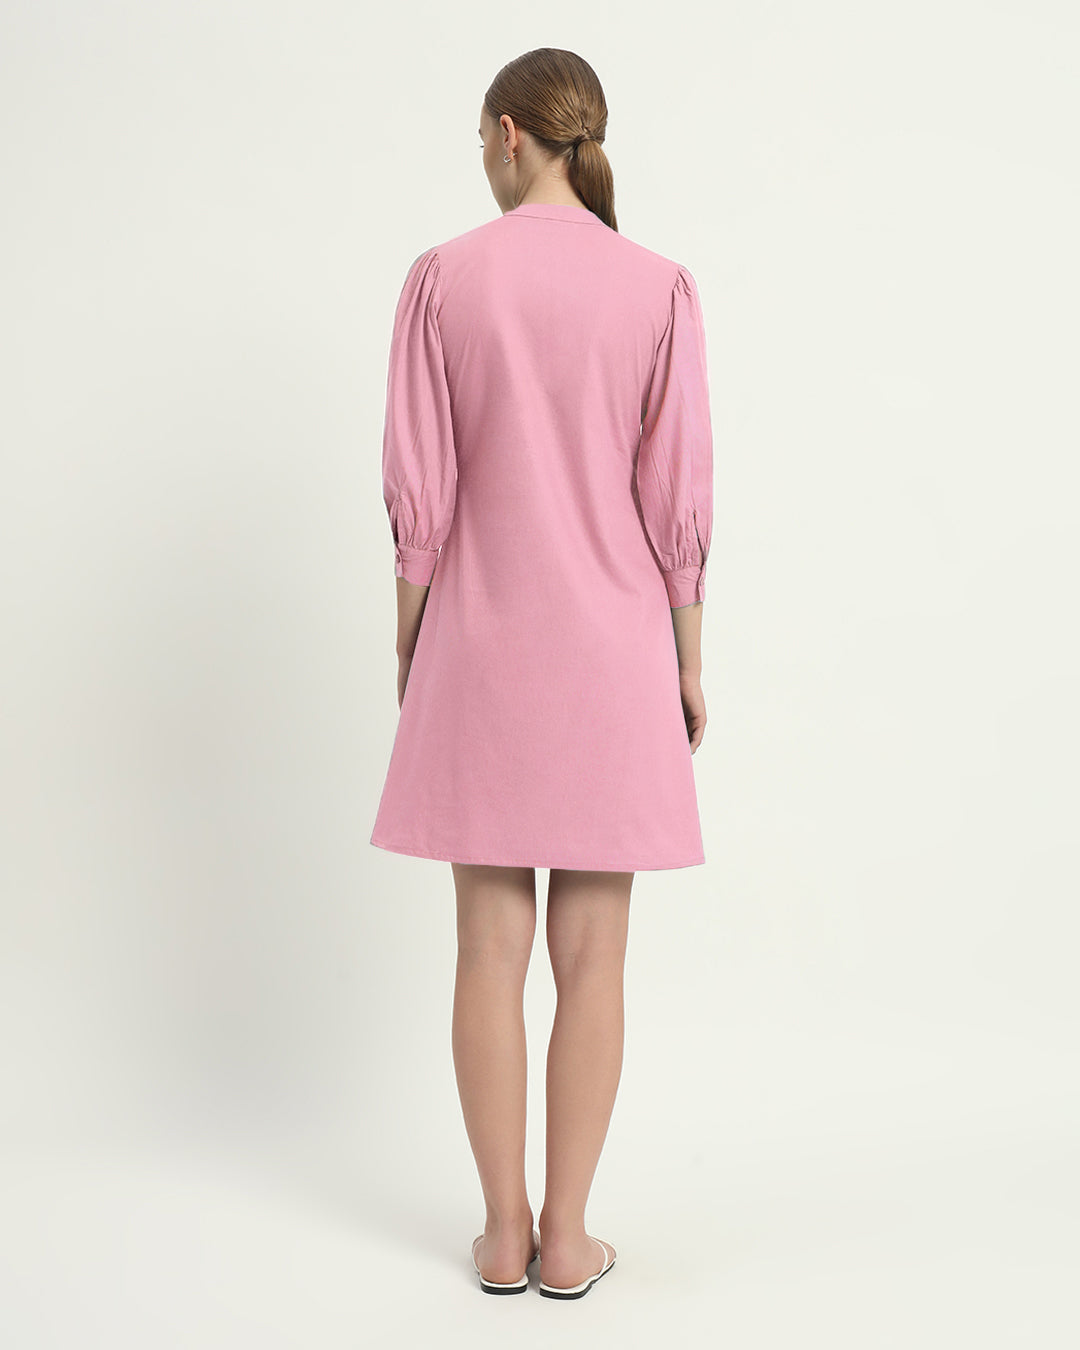 The Roslyn Fondant Pink Cotton Dress